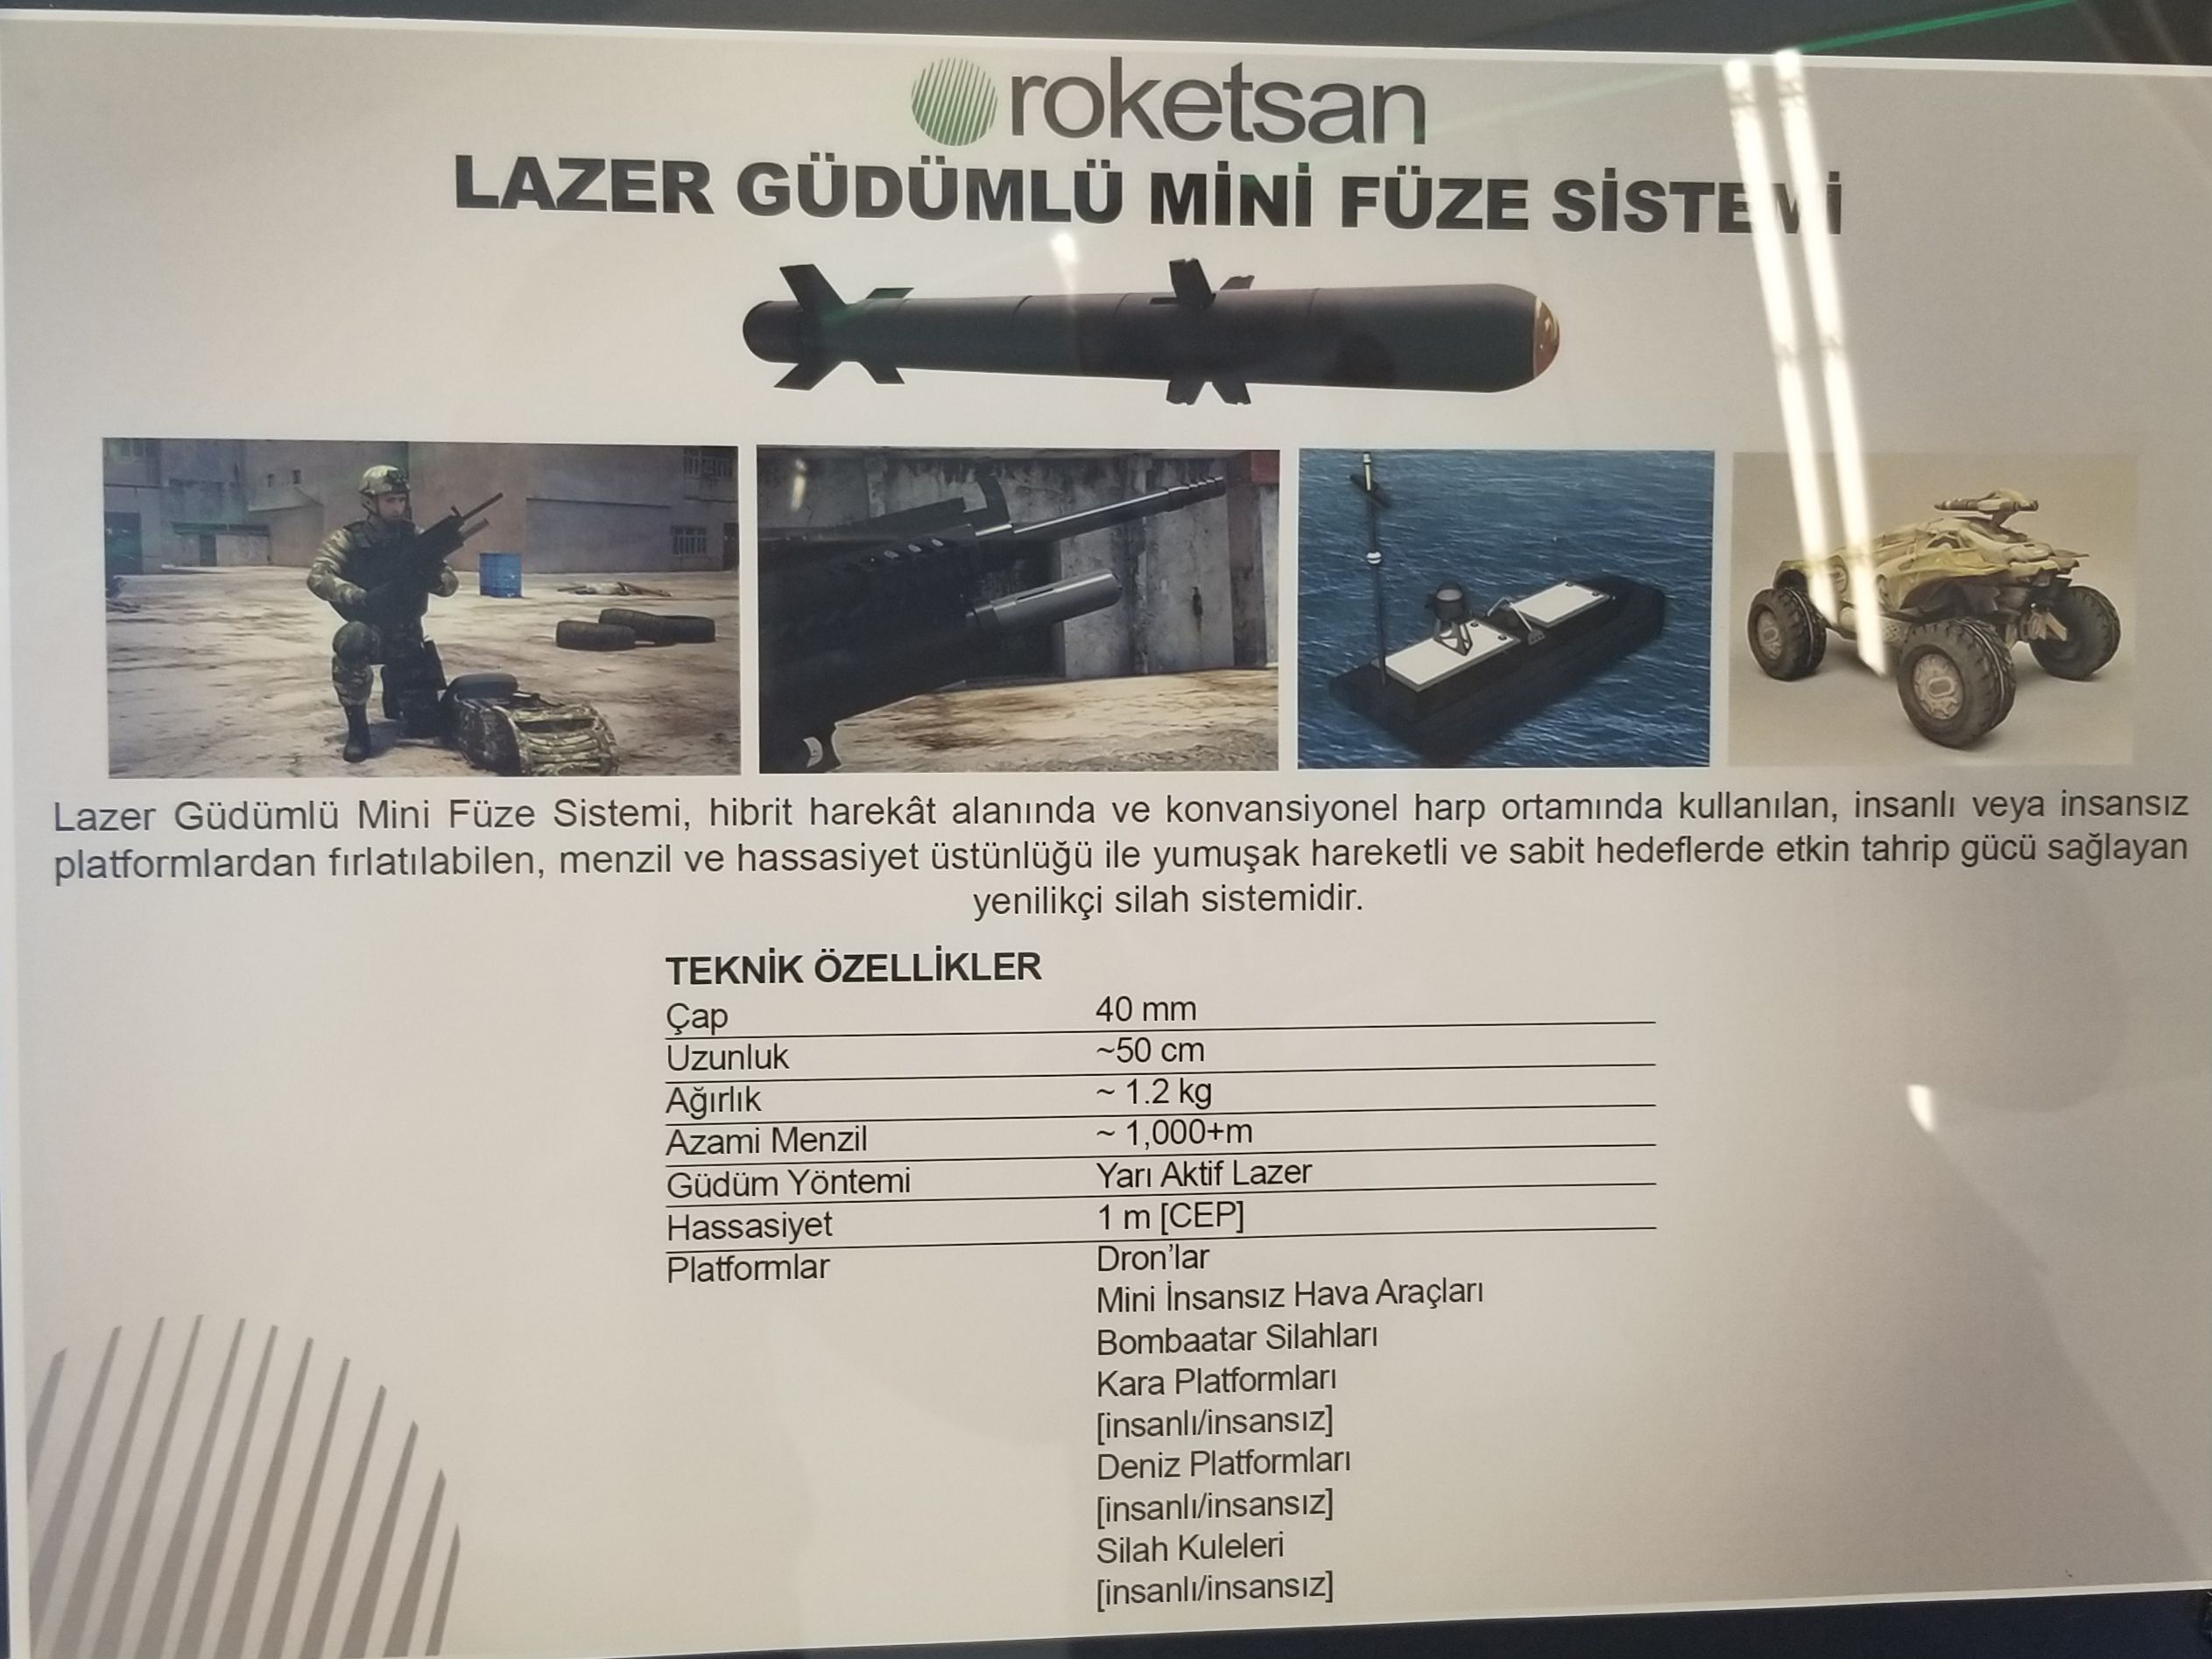 ROKETSAN to produce Mini Missile